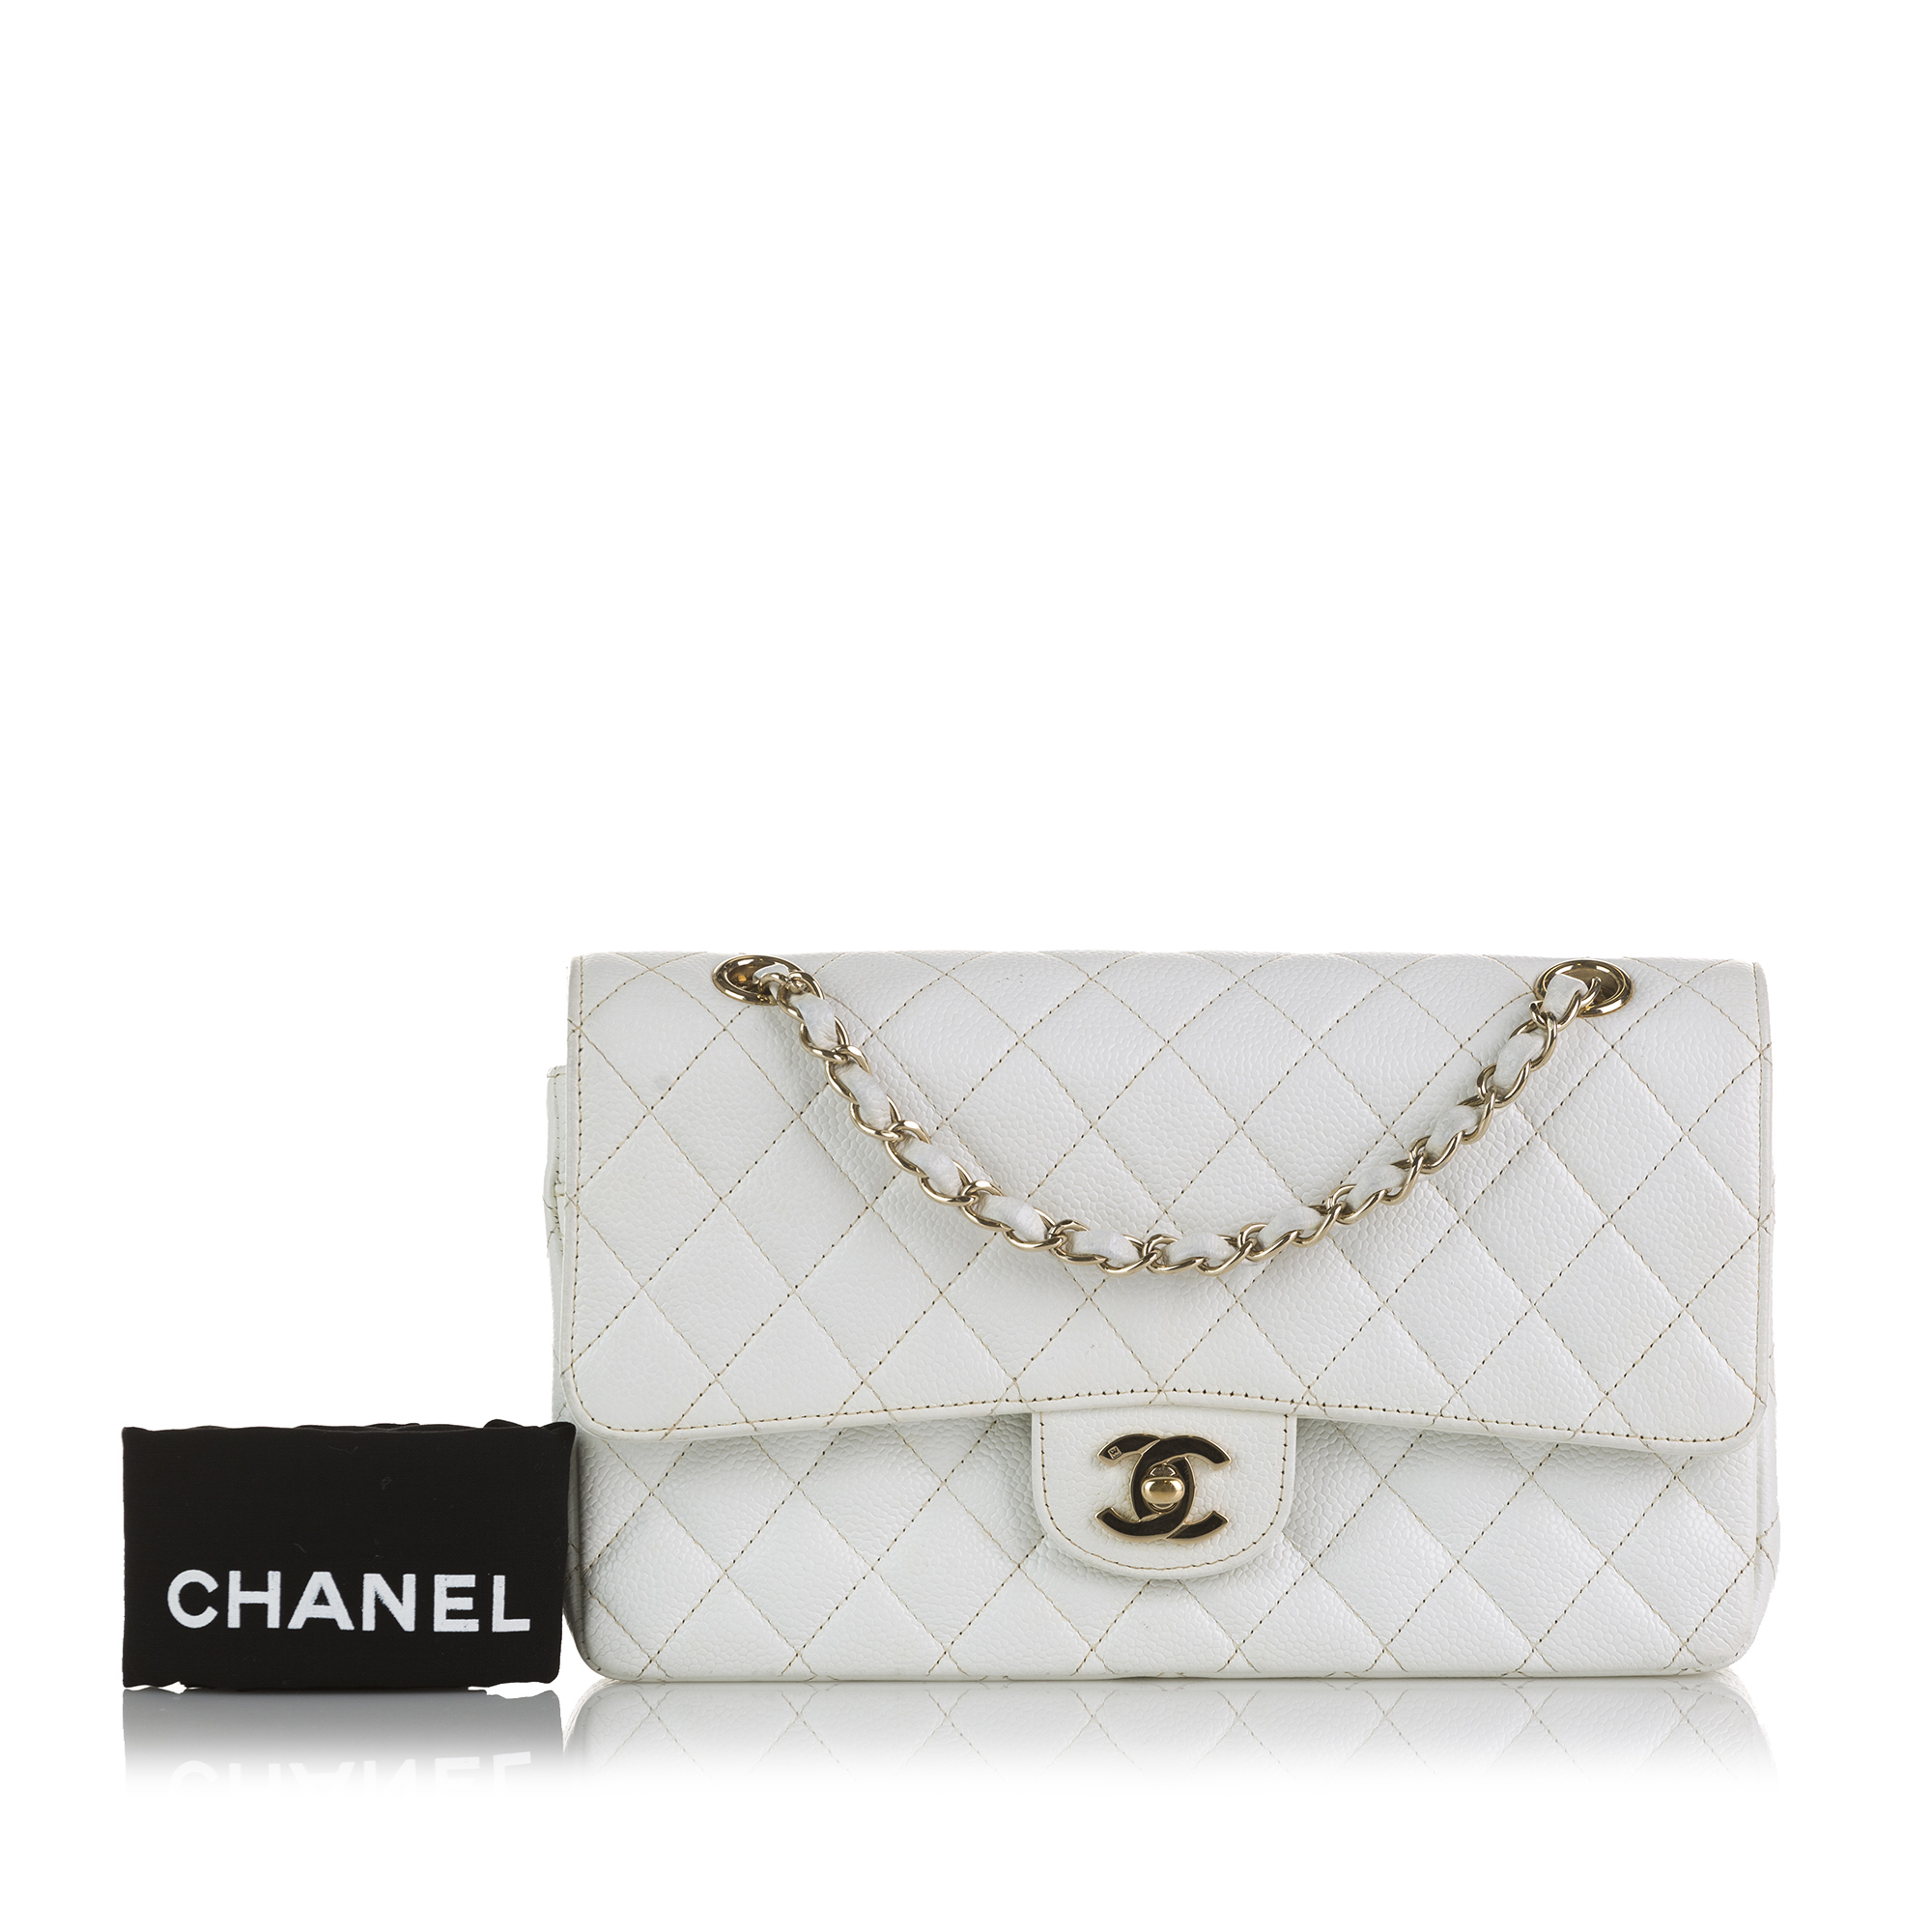 Chanel White Medium Classic Caviar Leather Double Flap Bag